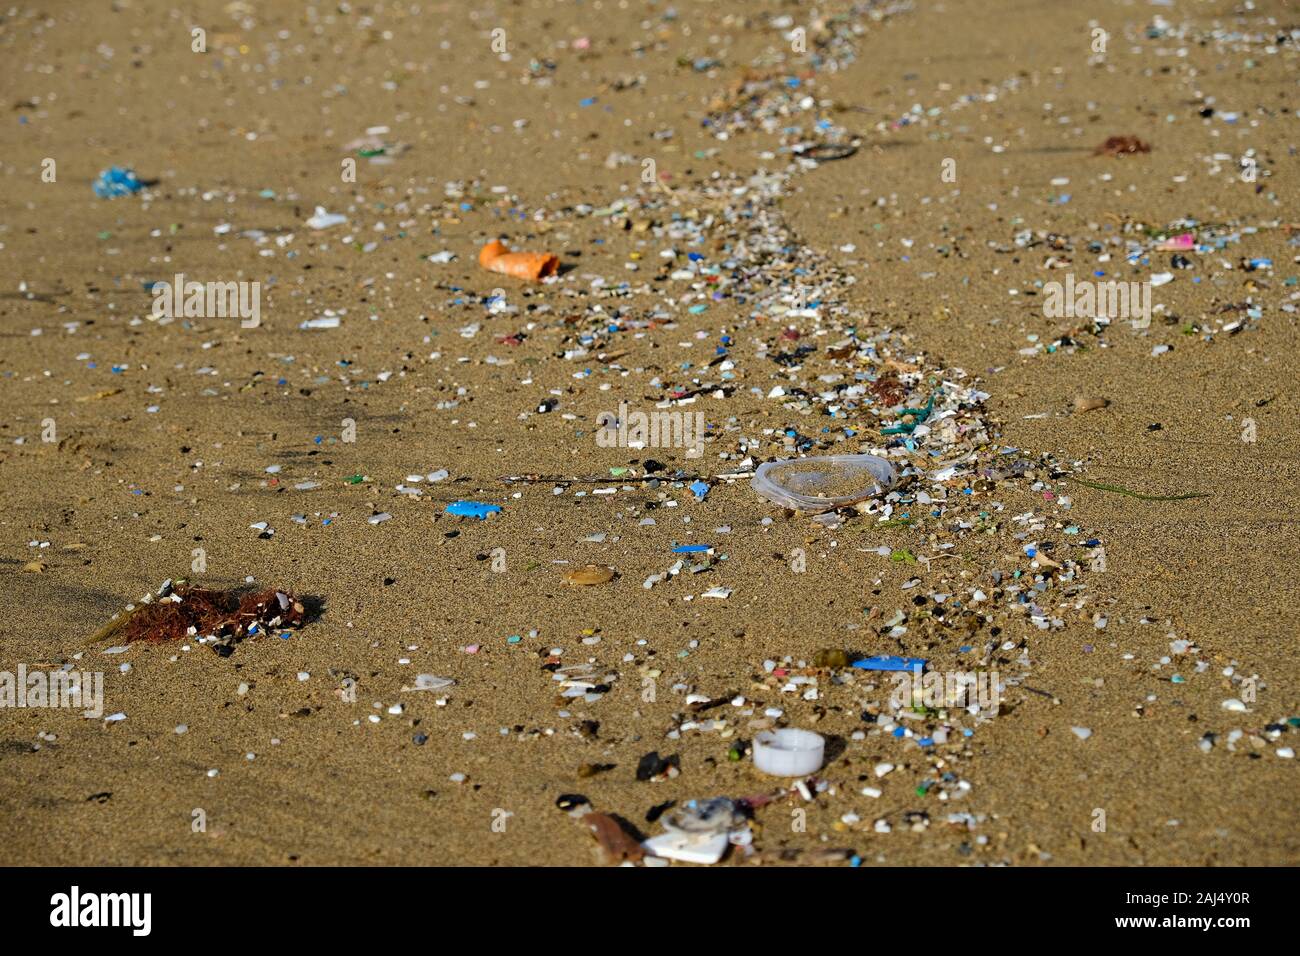 Microplastics debris on a beach. Stock Photo